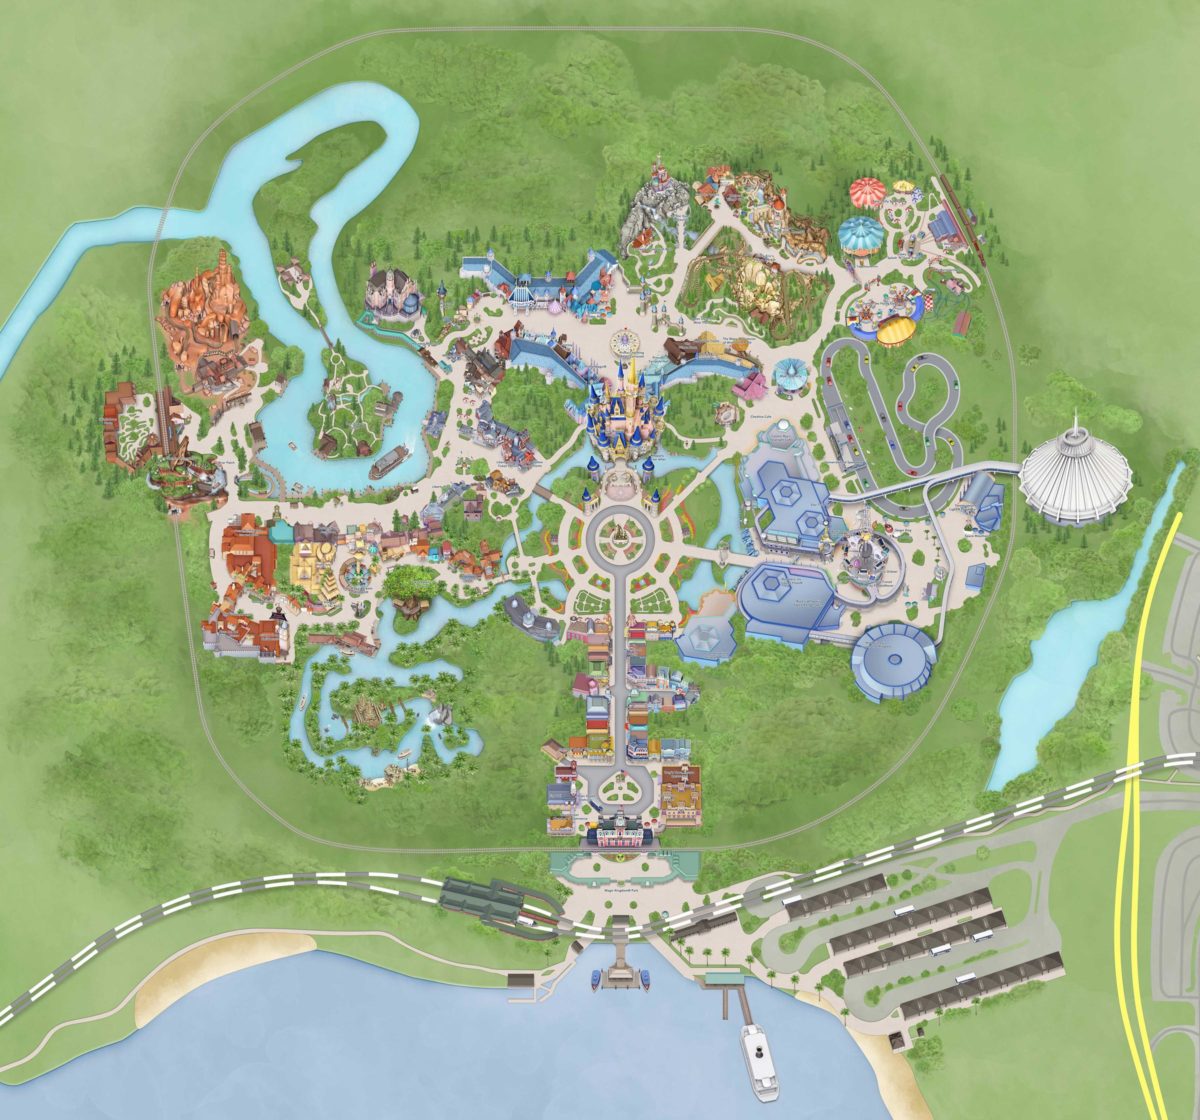 disney magic kingdom interactive map